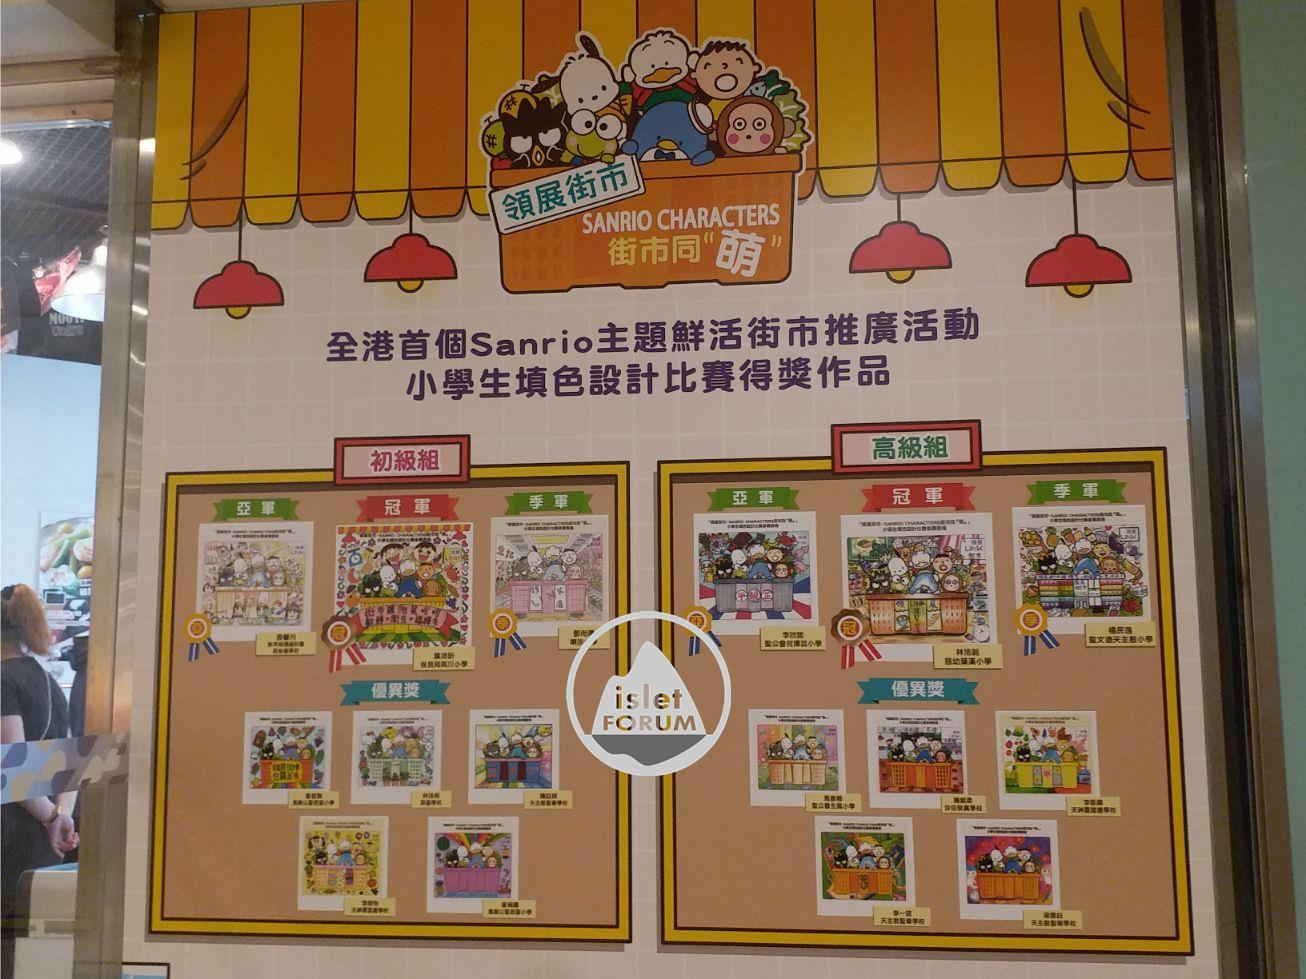 禾輋街市wo che market (4).jpg